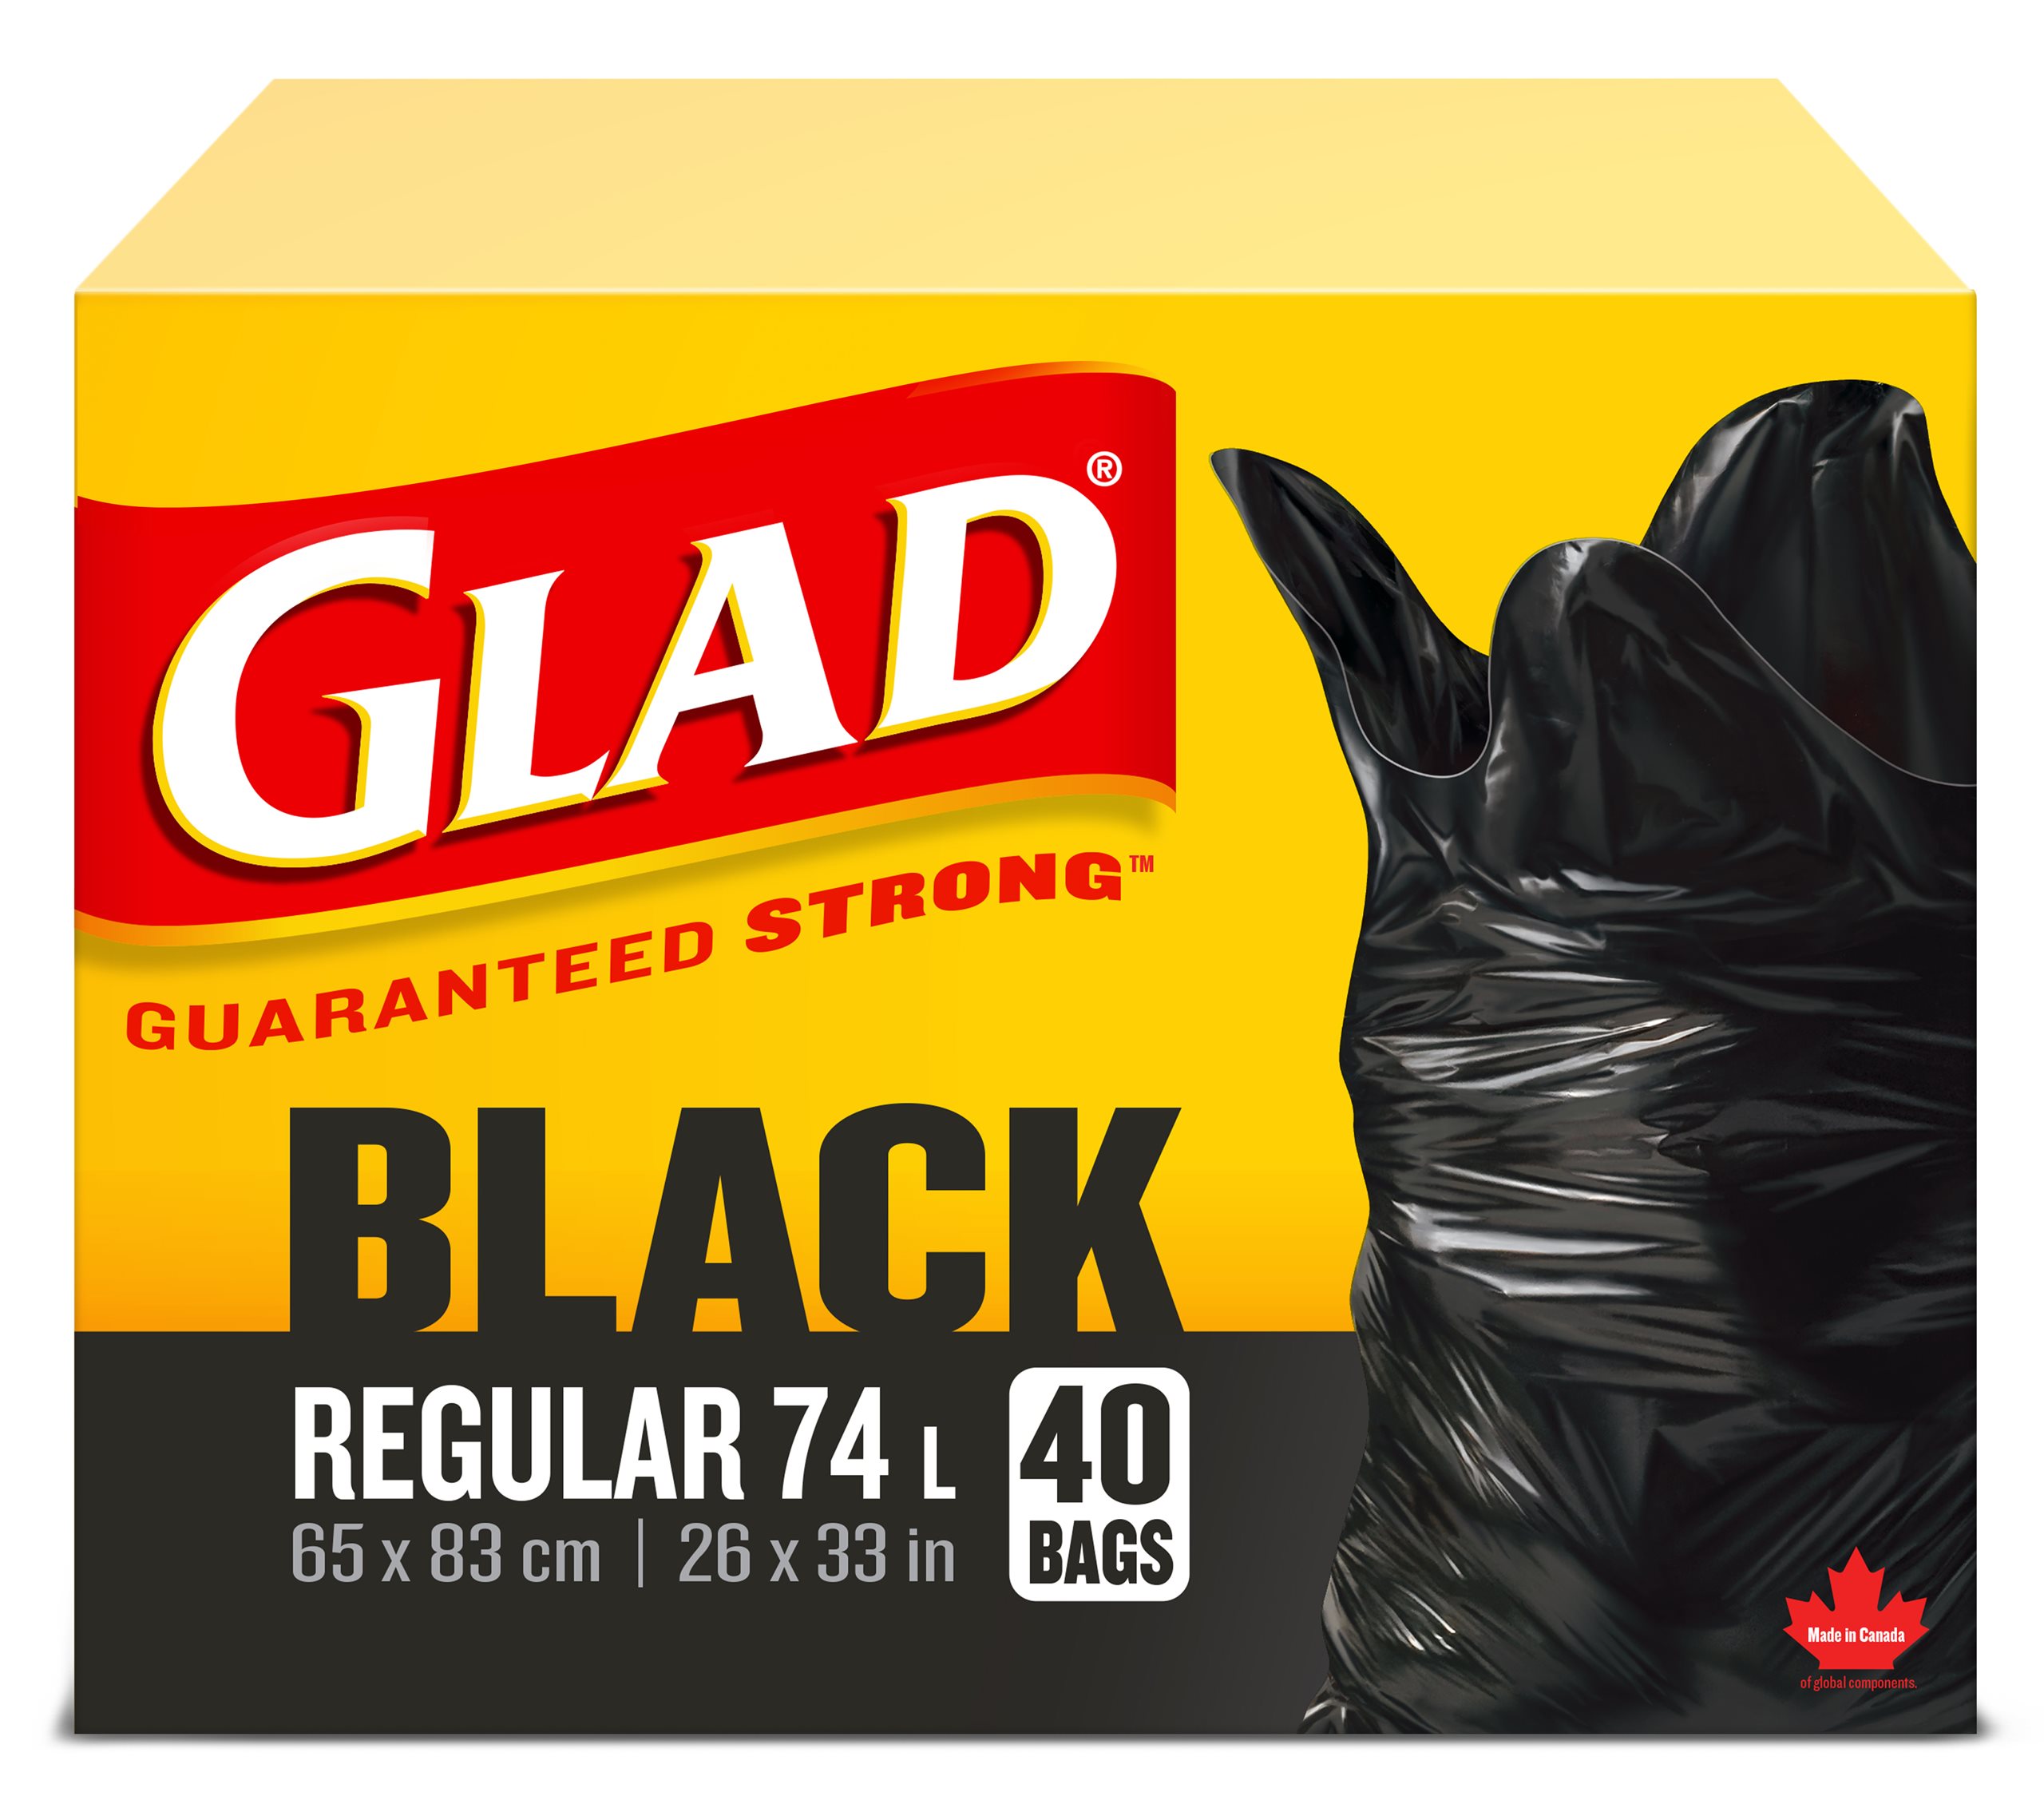 Glad Large Quick-Tie Trash Bags - Extra Strong 30 Gallon Black Trash Bag -  40